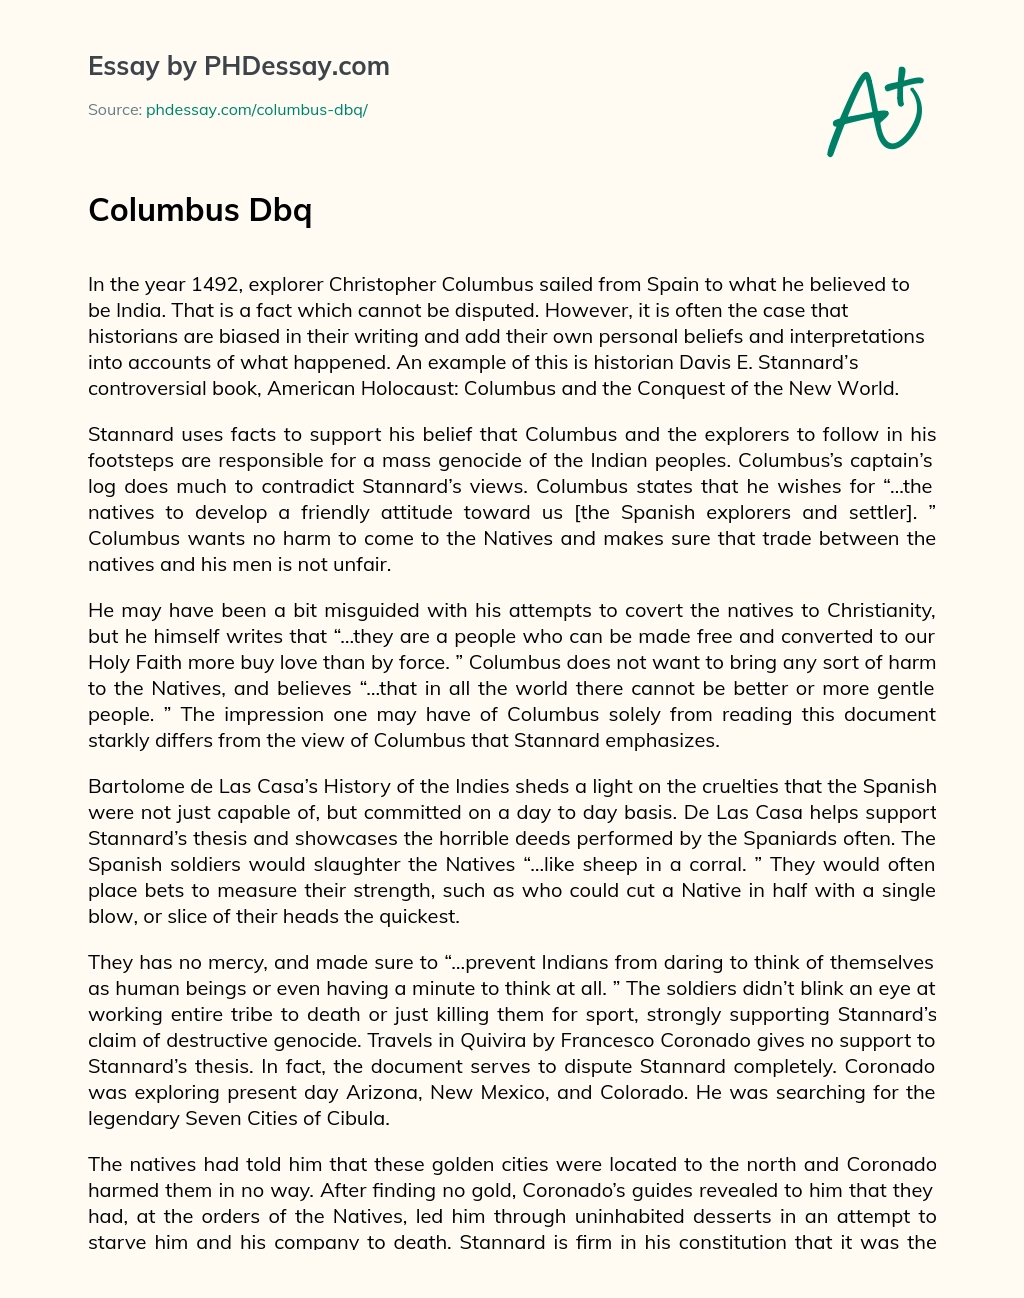 Columbus Dbq essay